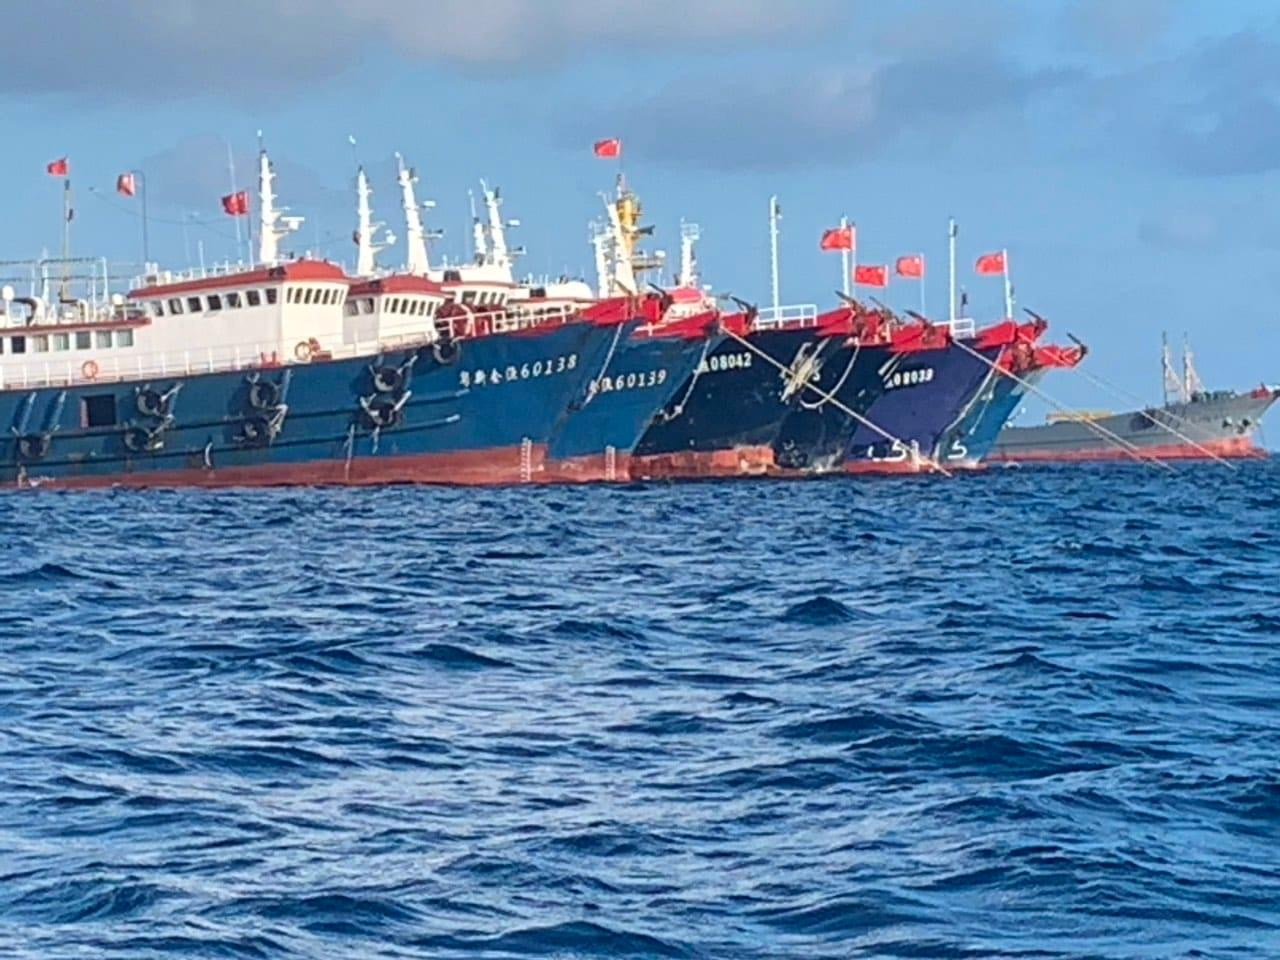 Chinese vessels at Whitsun Reef, South China Sea